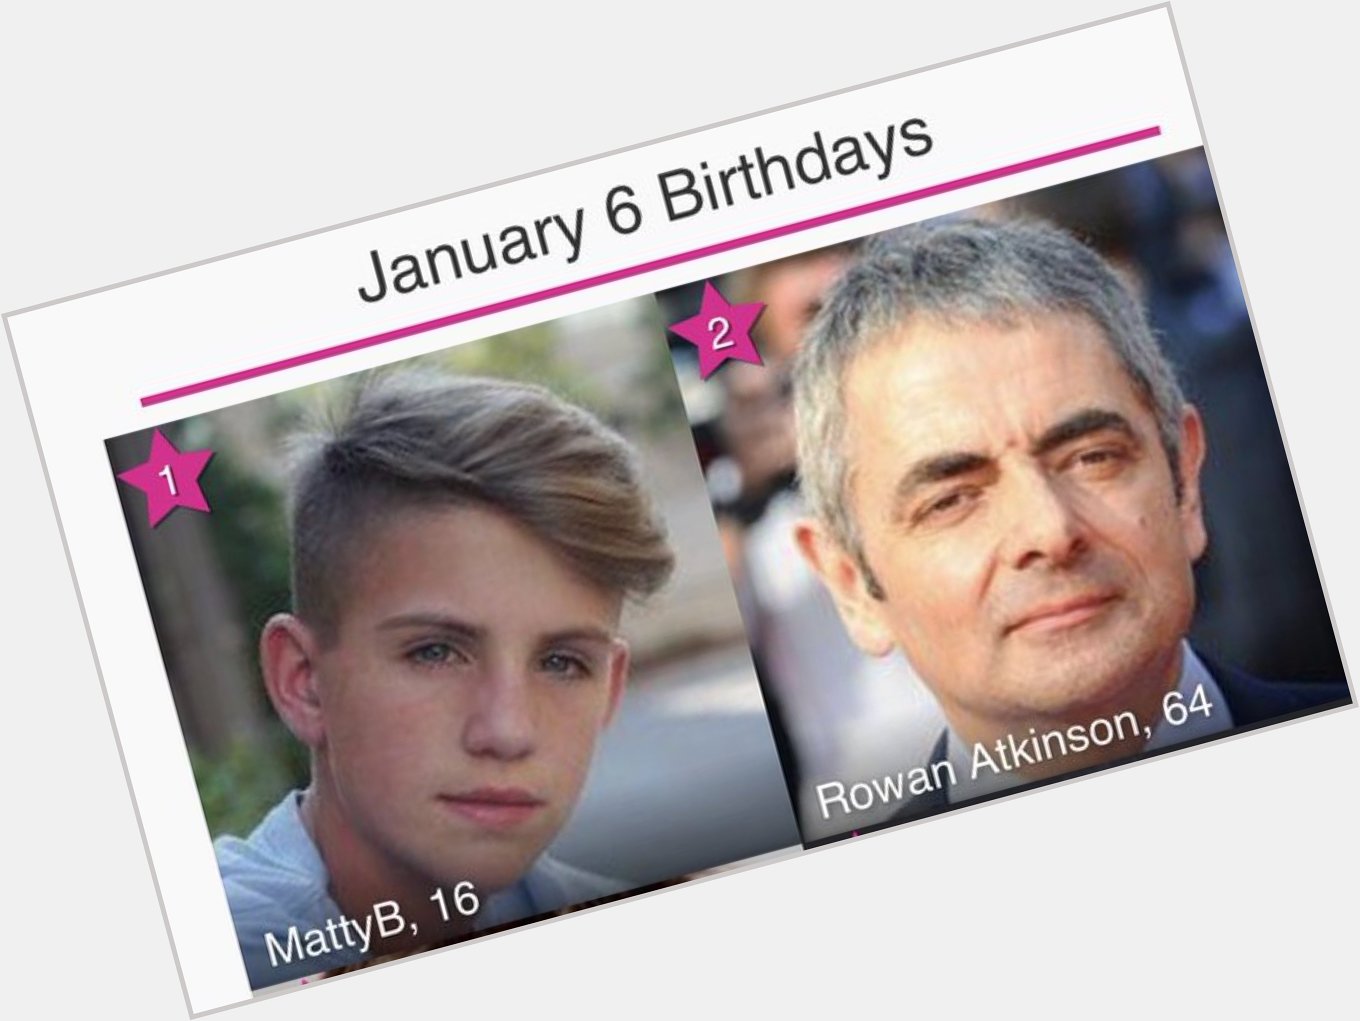 Happy Birthday to MattyBRaps and Rowan Atkinson 